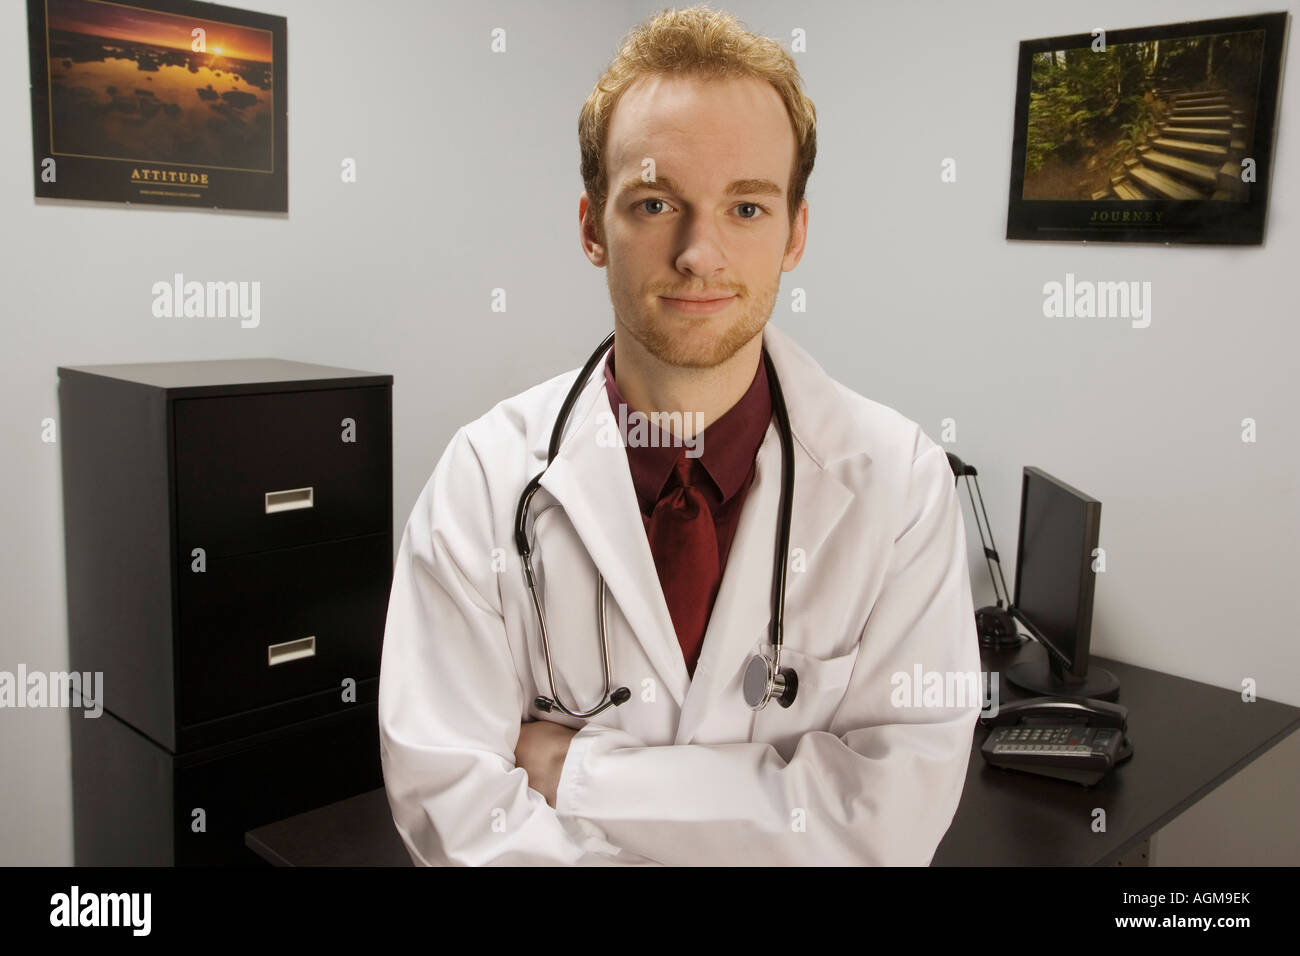 Medical professional portrait Stock Photo